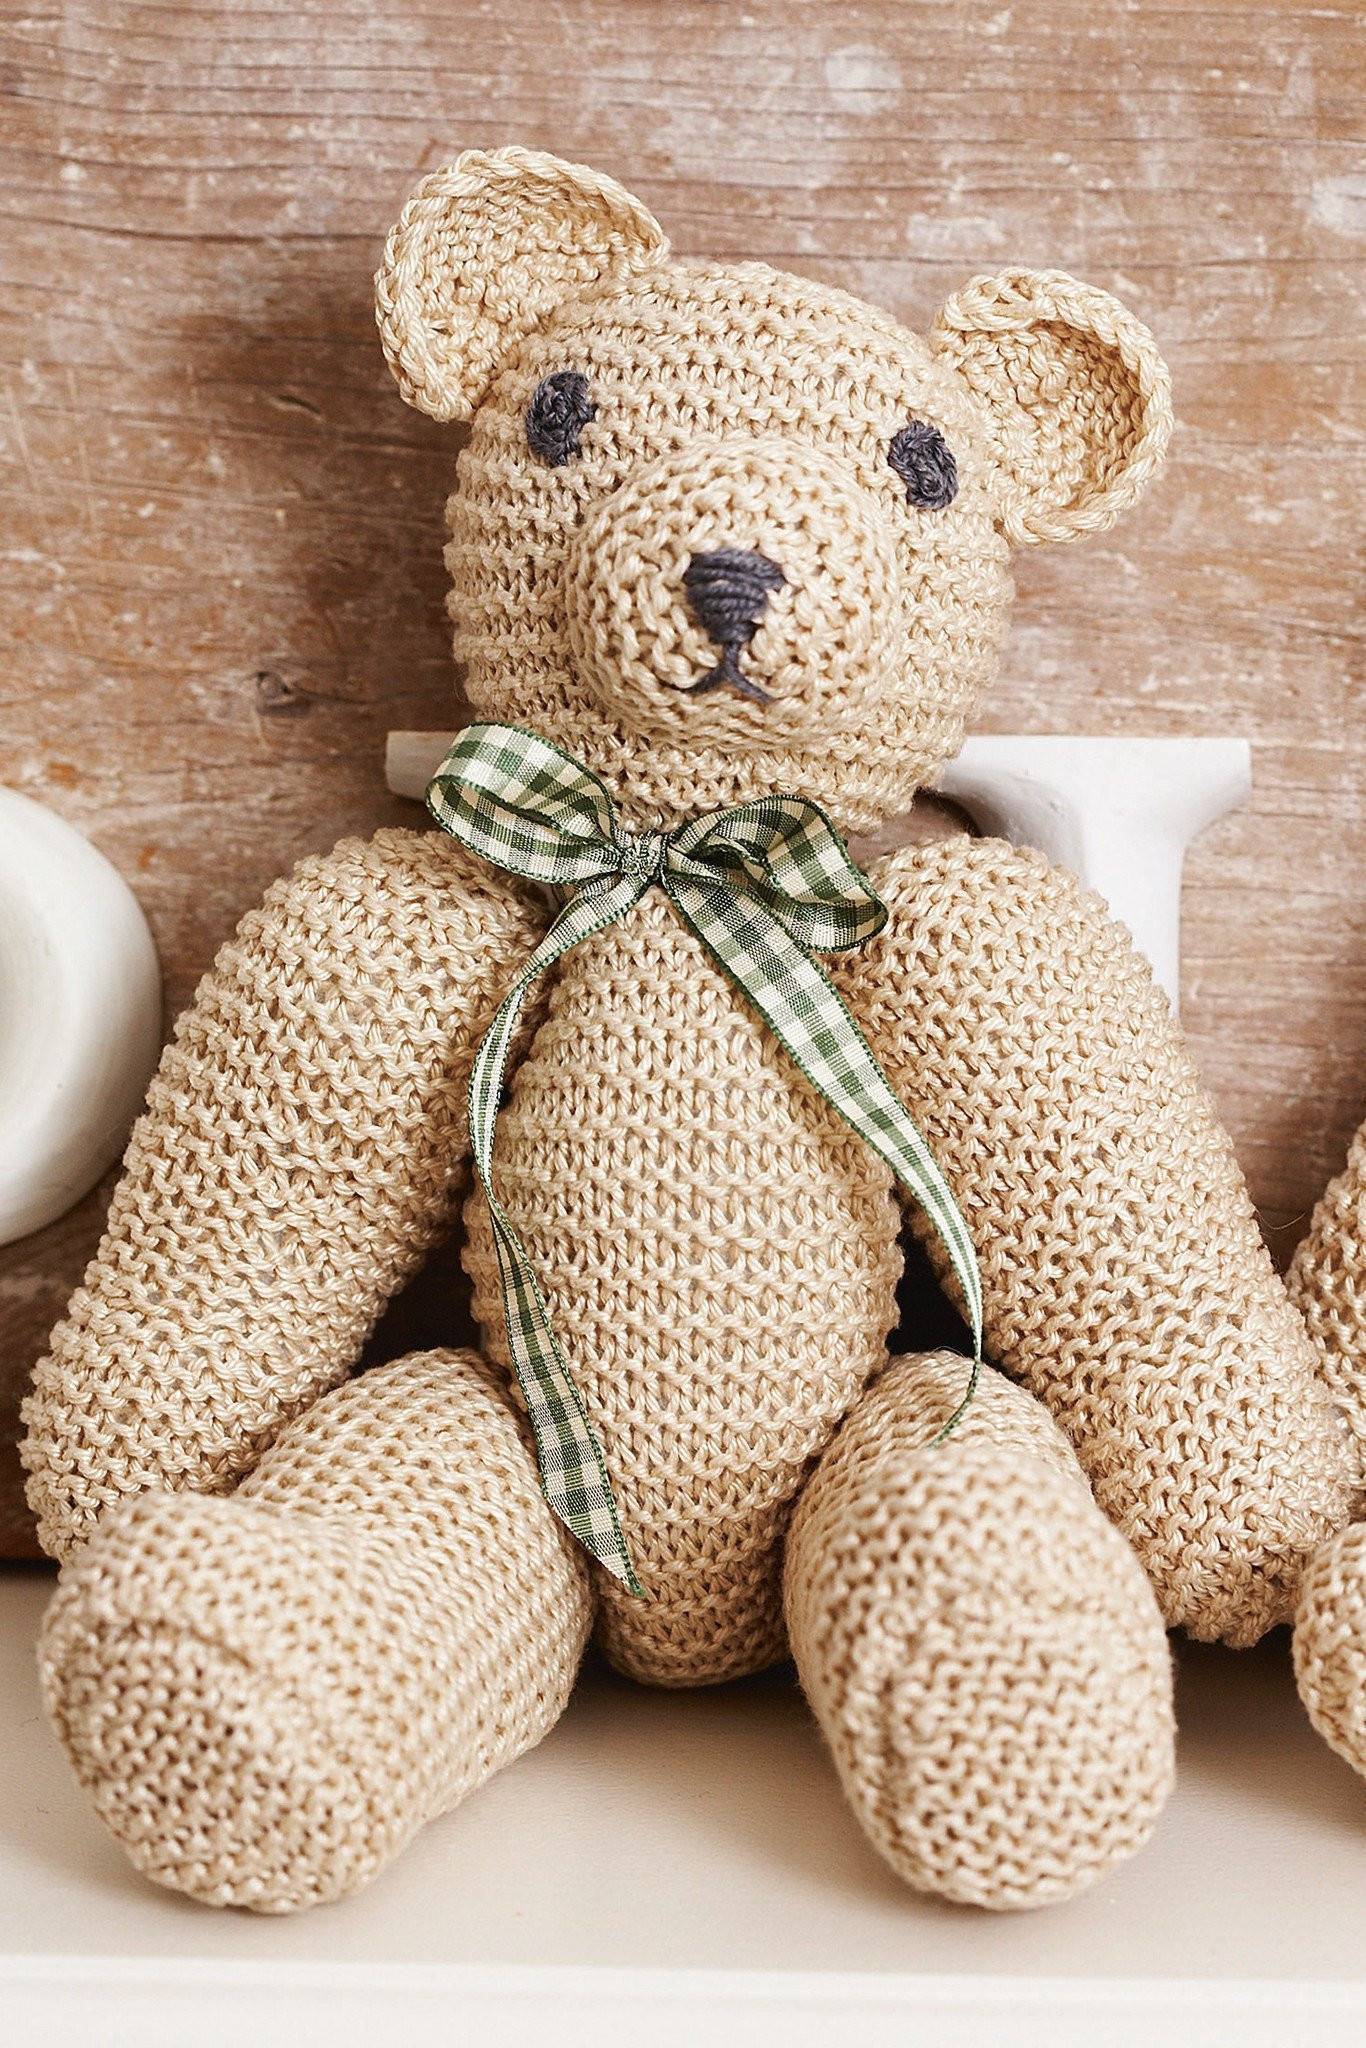 Vintage Teddy Bears Knitting Pattern The Knitting Network